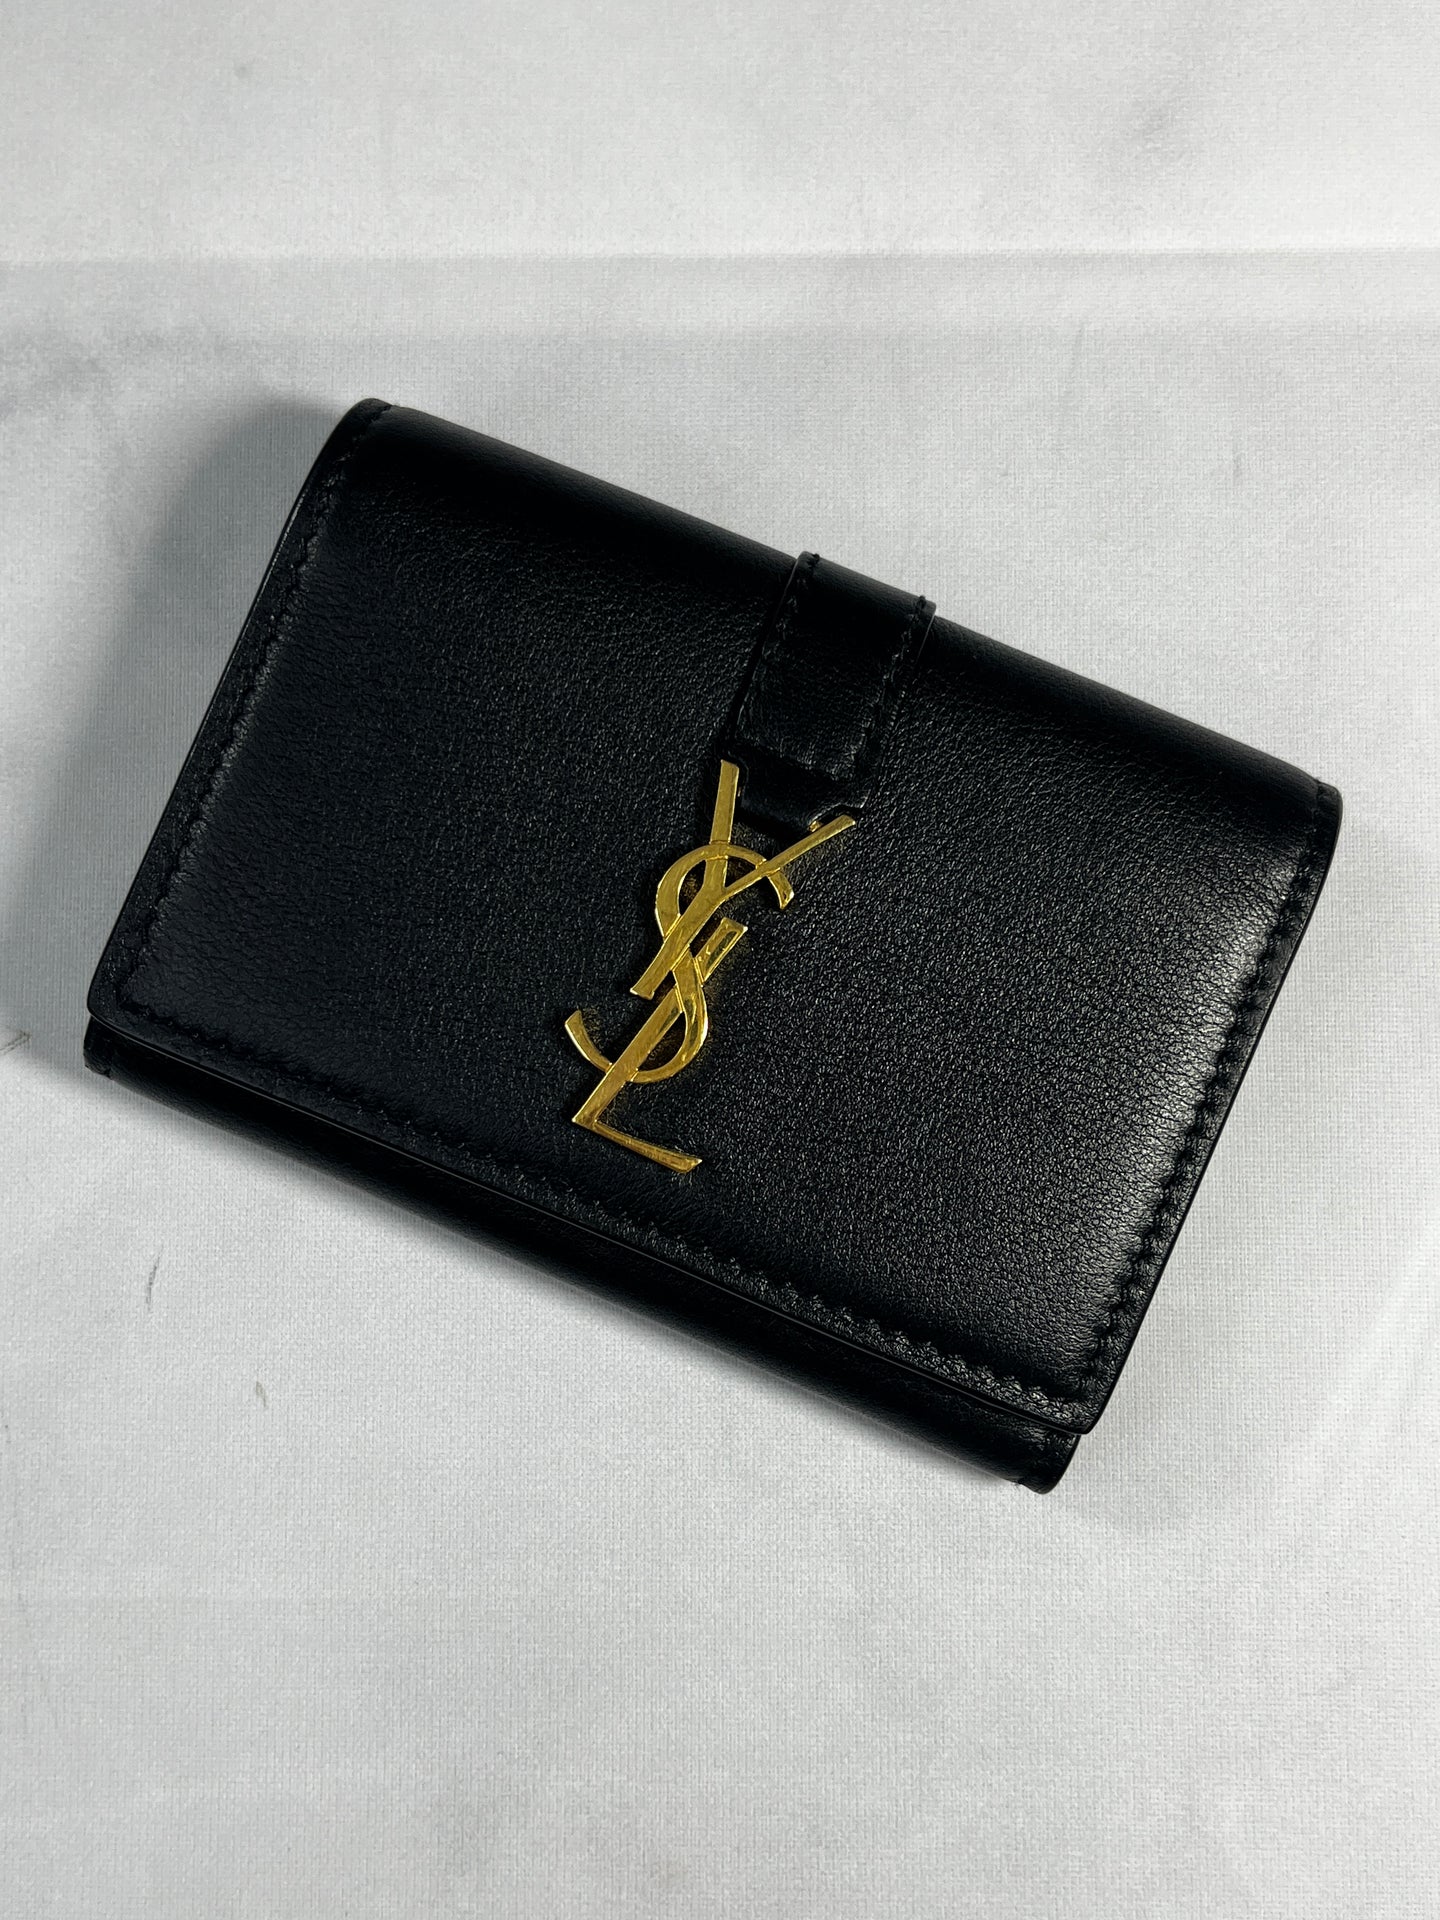 YSL Black Key Slim Wallet